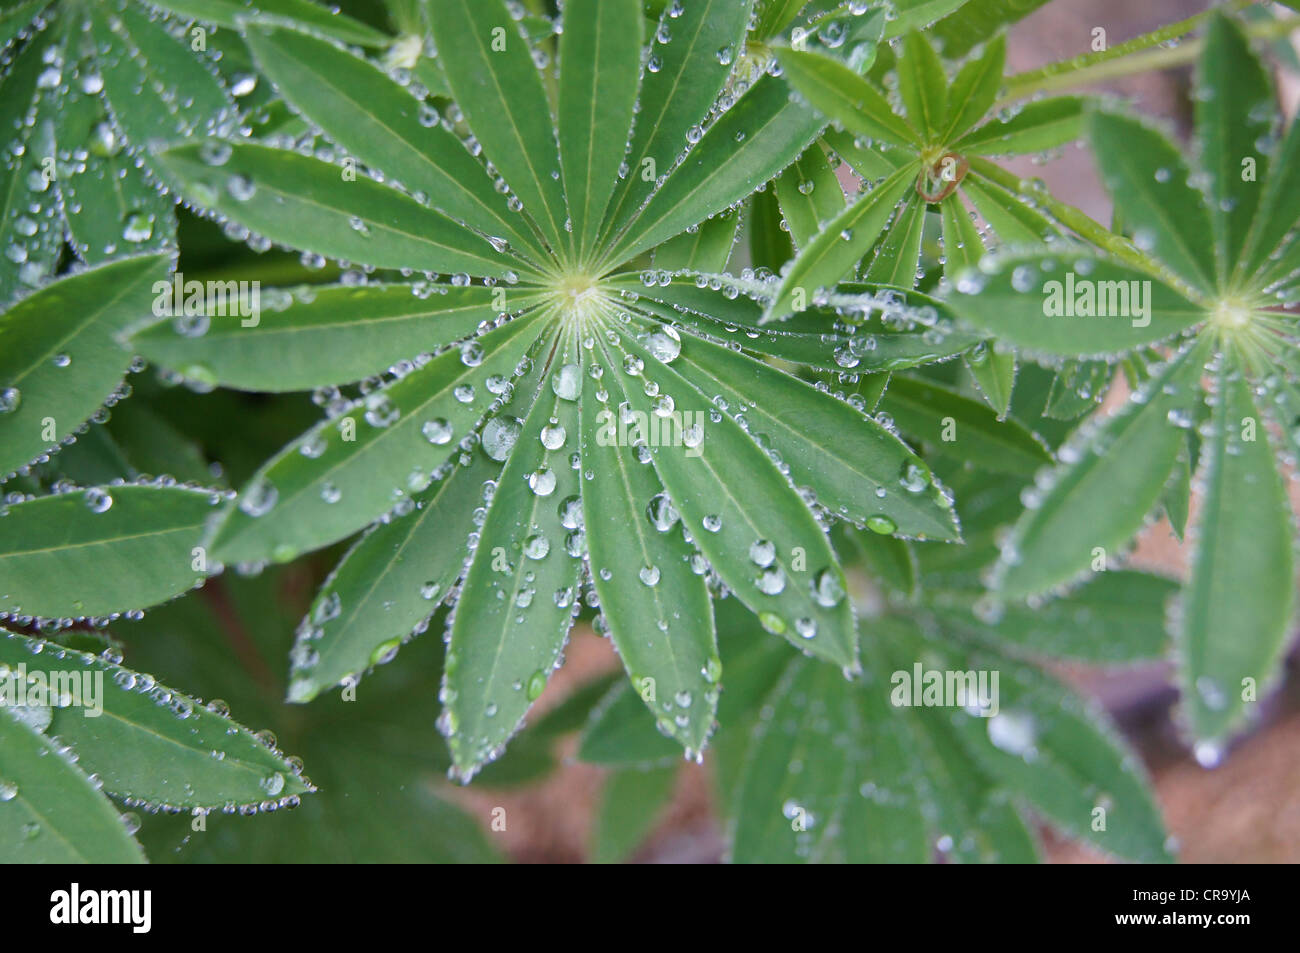 Las gotas de lluvia sobre hojas de altramuz. Tomada en Hilperton, Wiltshire, UK Foto de stock